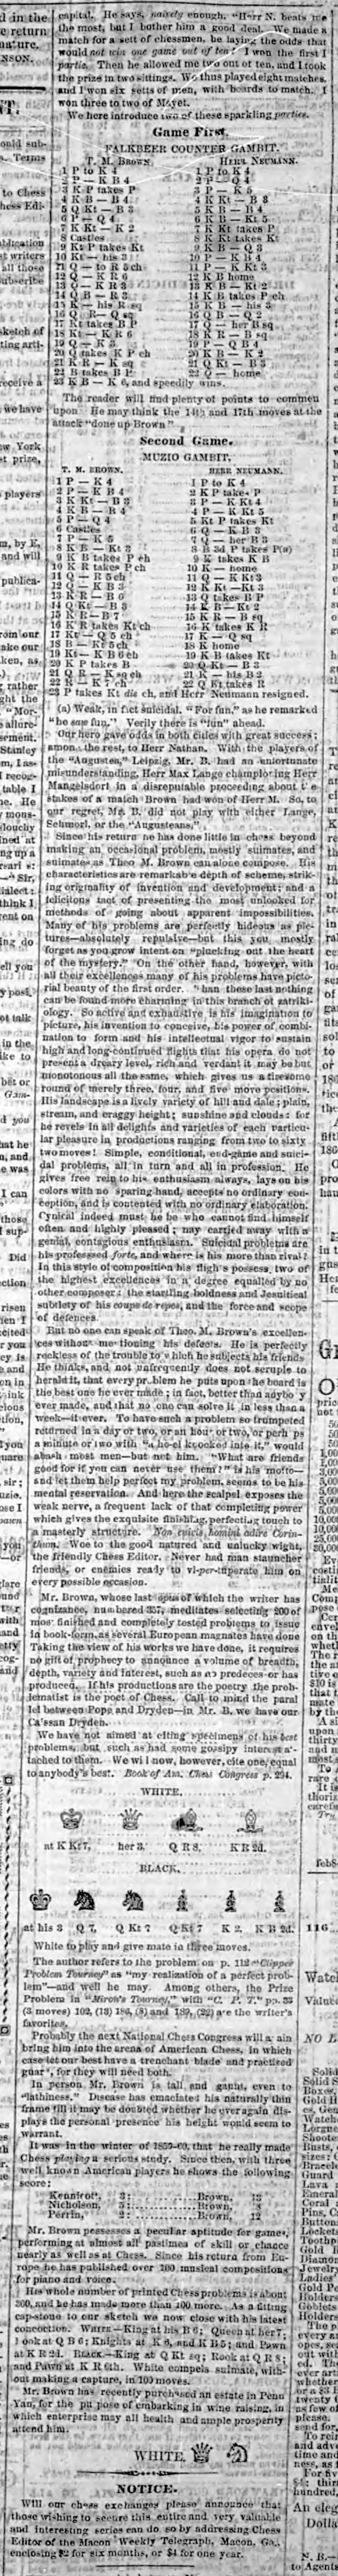 1867.02.08-02 Macon Georgia Weekly Telegraph.jpg